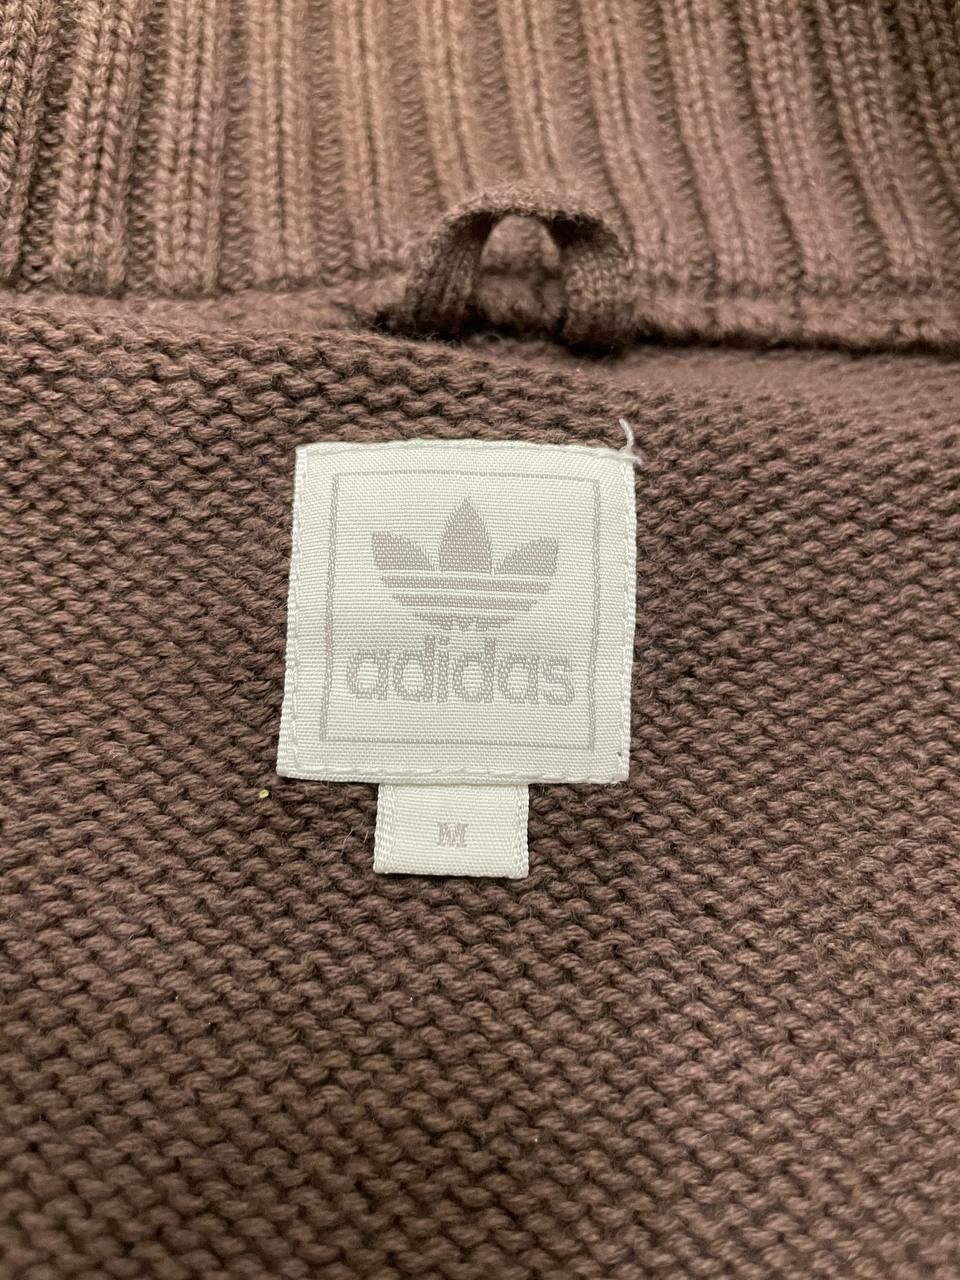 Винтажная куртка мастерка Adidas трехлистник олимпийка